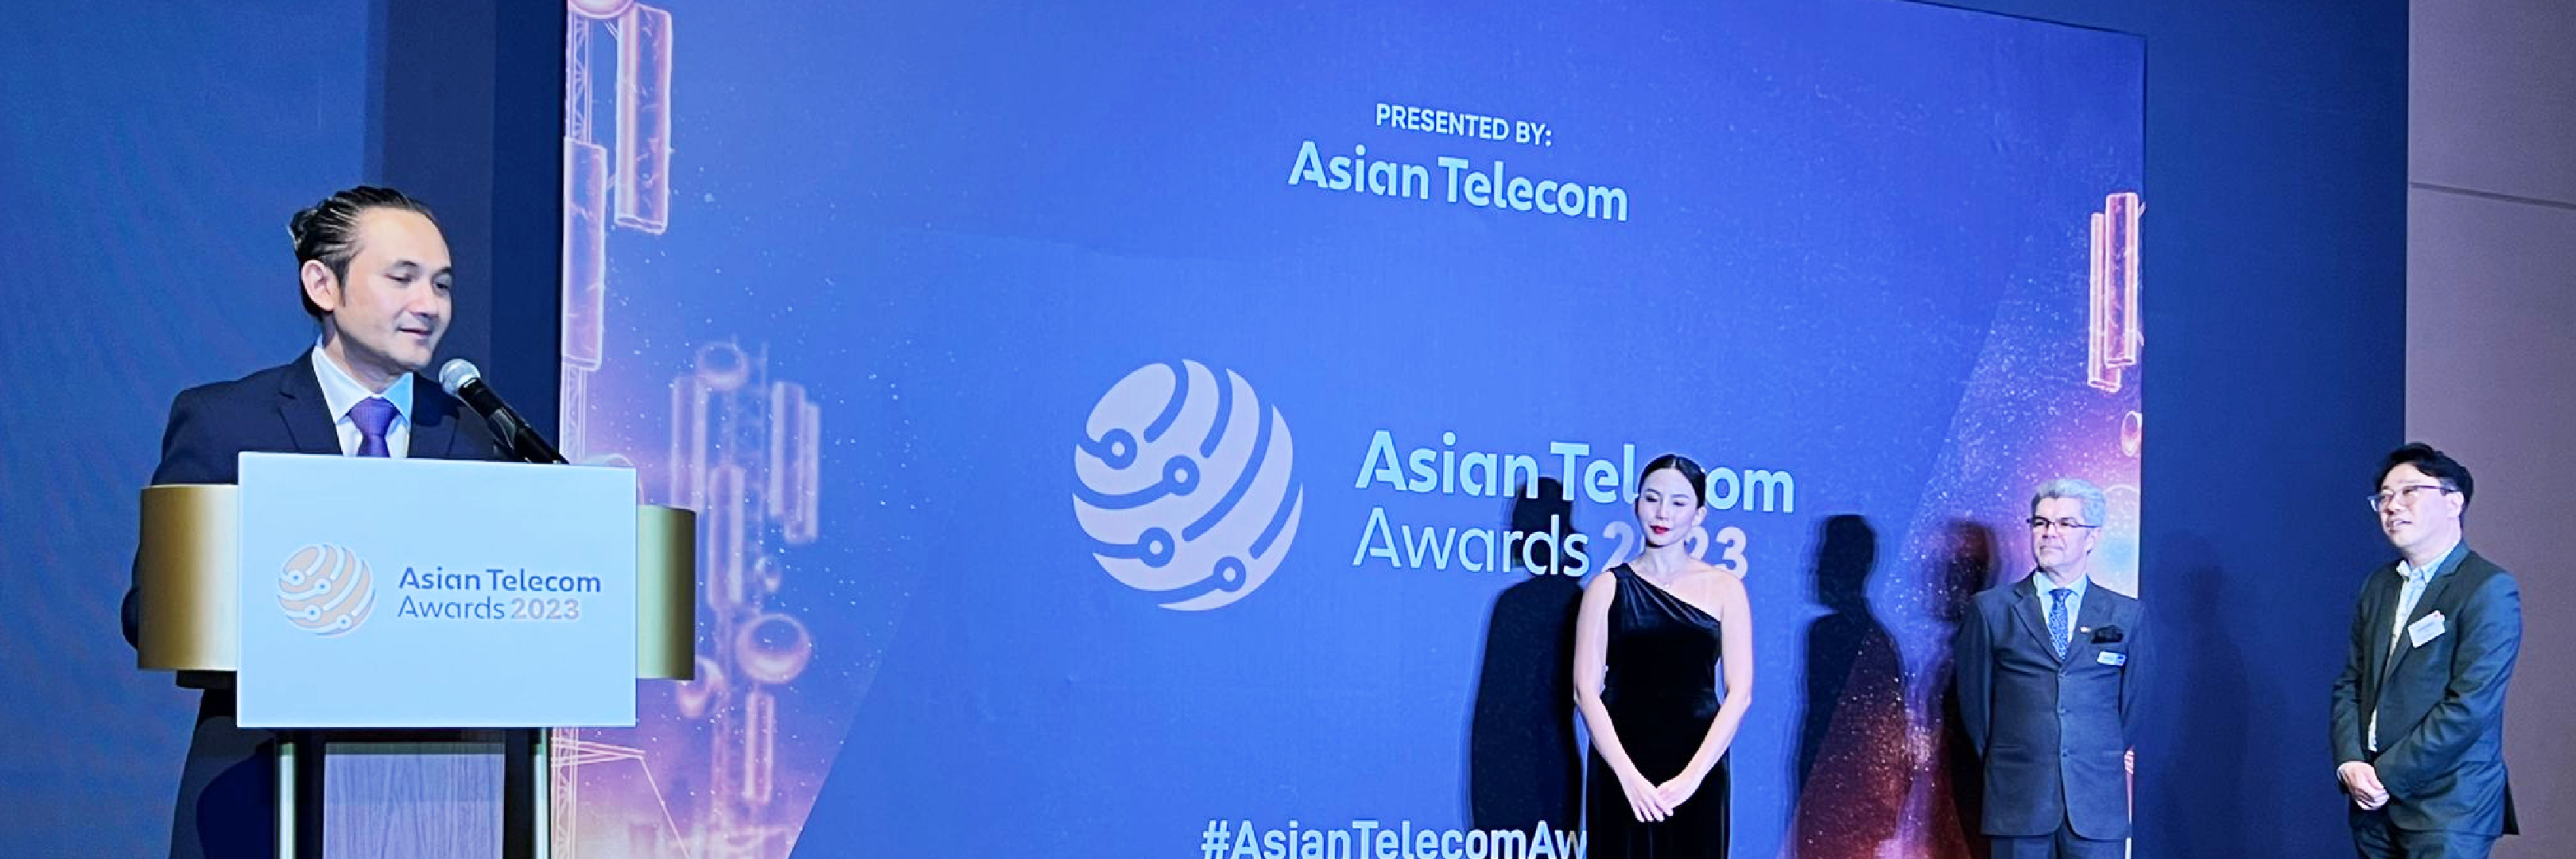 Asian-Telecom-Awards 6